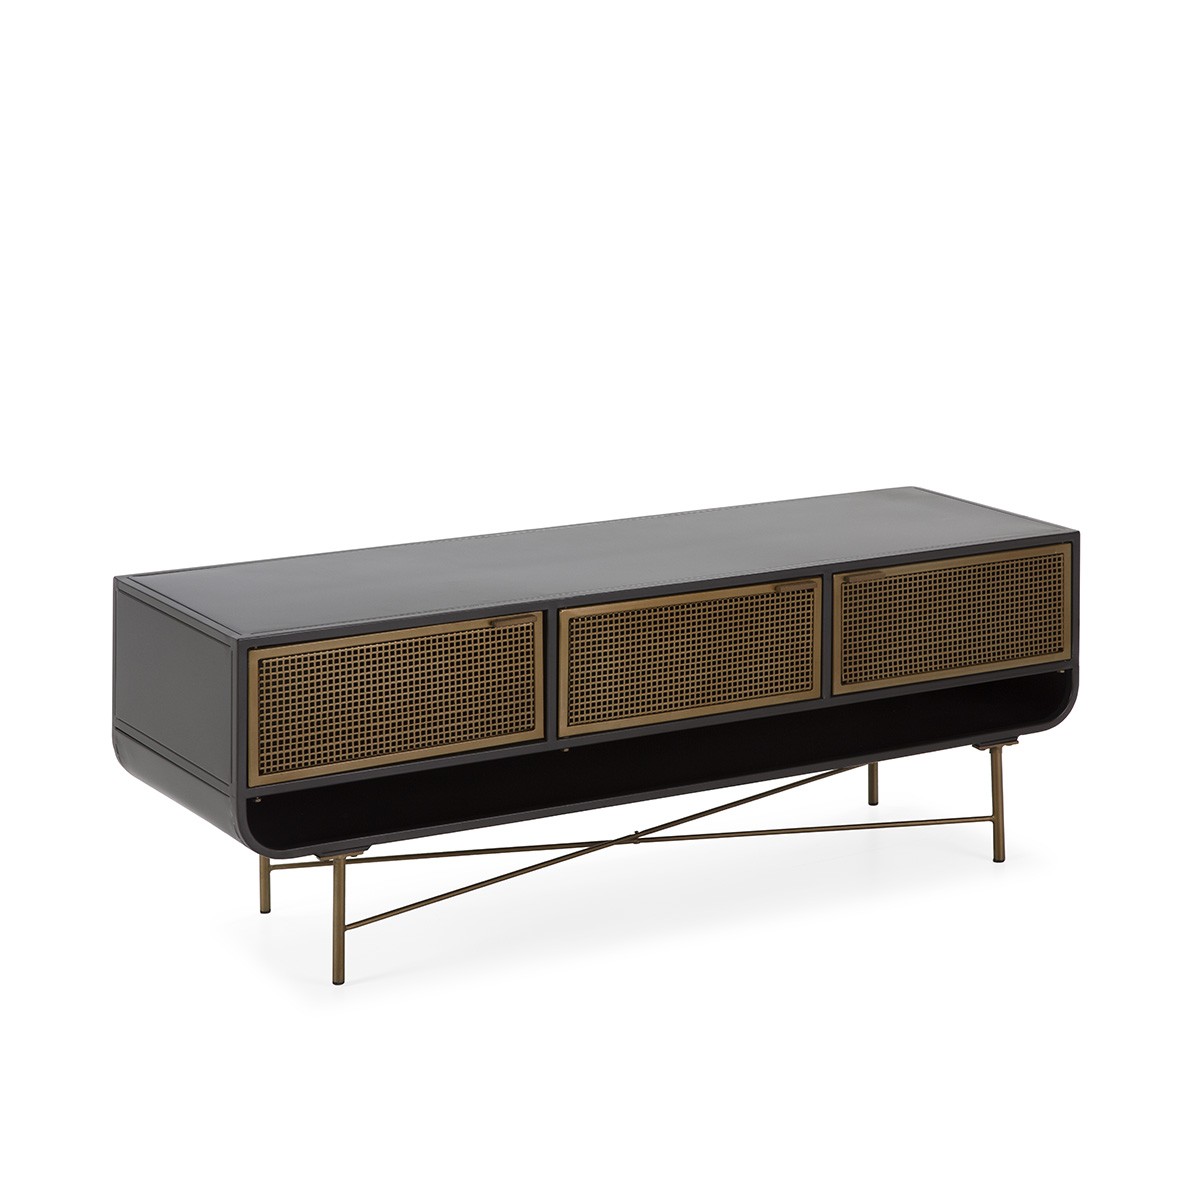 Mueble para TV - industrial  Steel furniture design, Iron